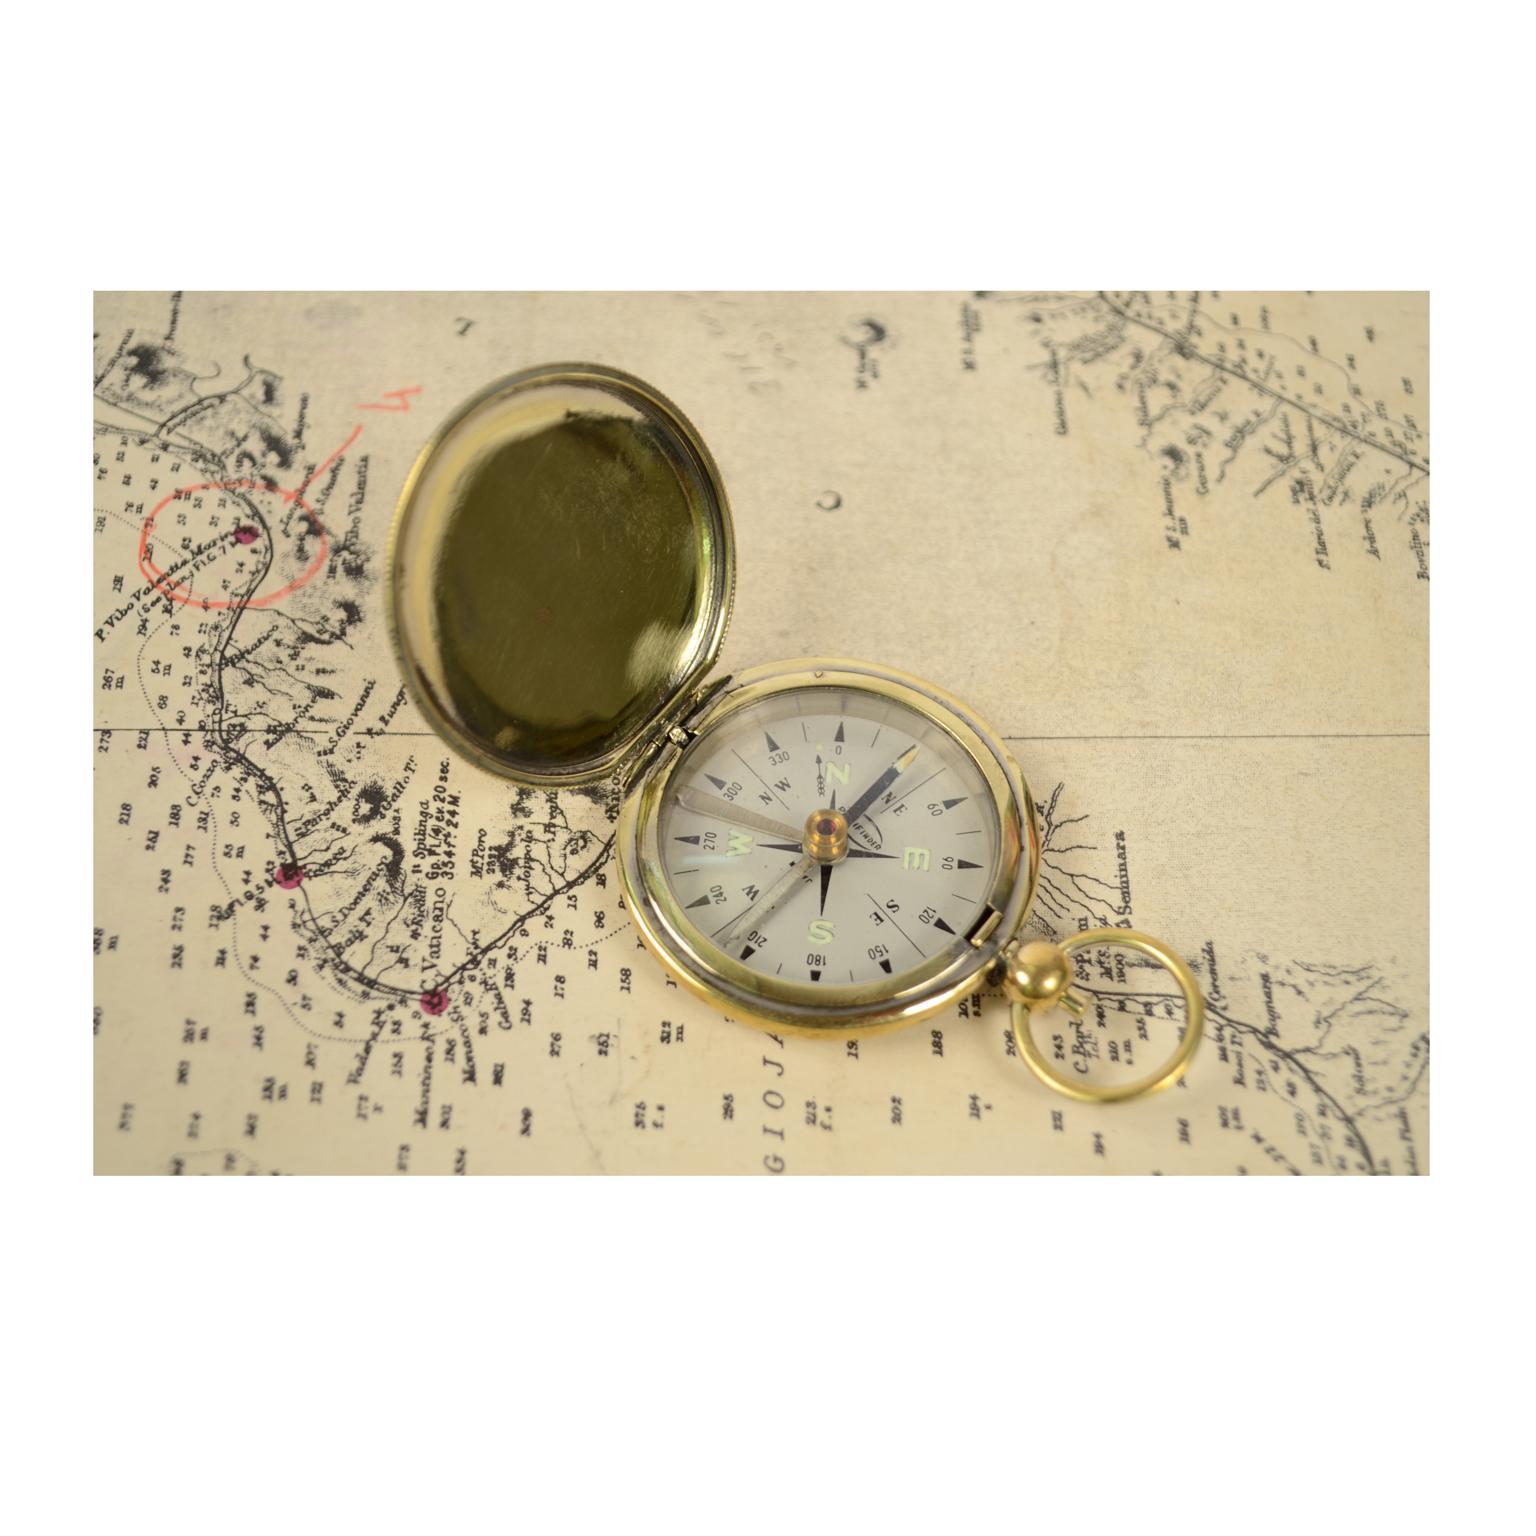 pathfinder pocket compass